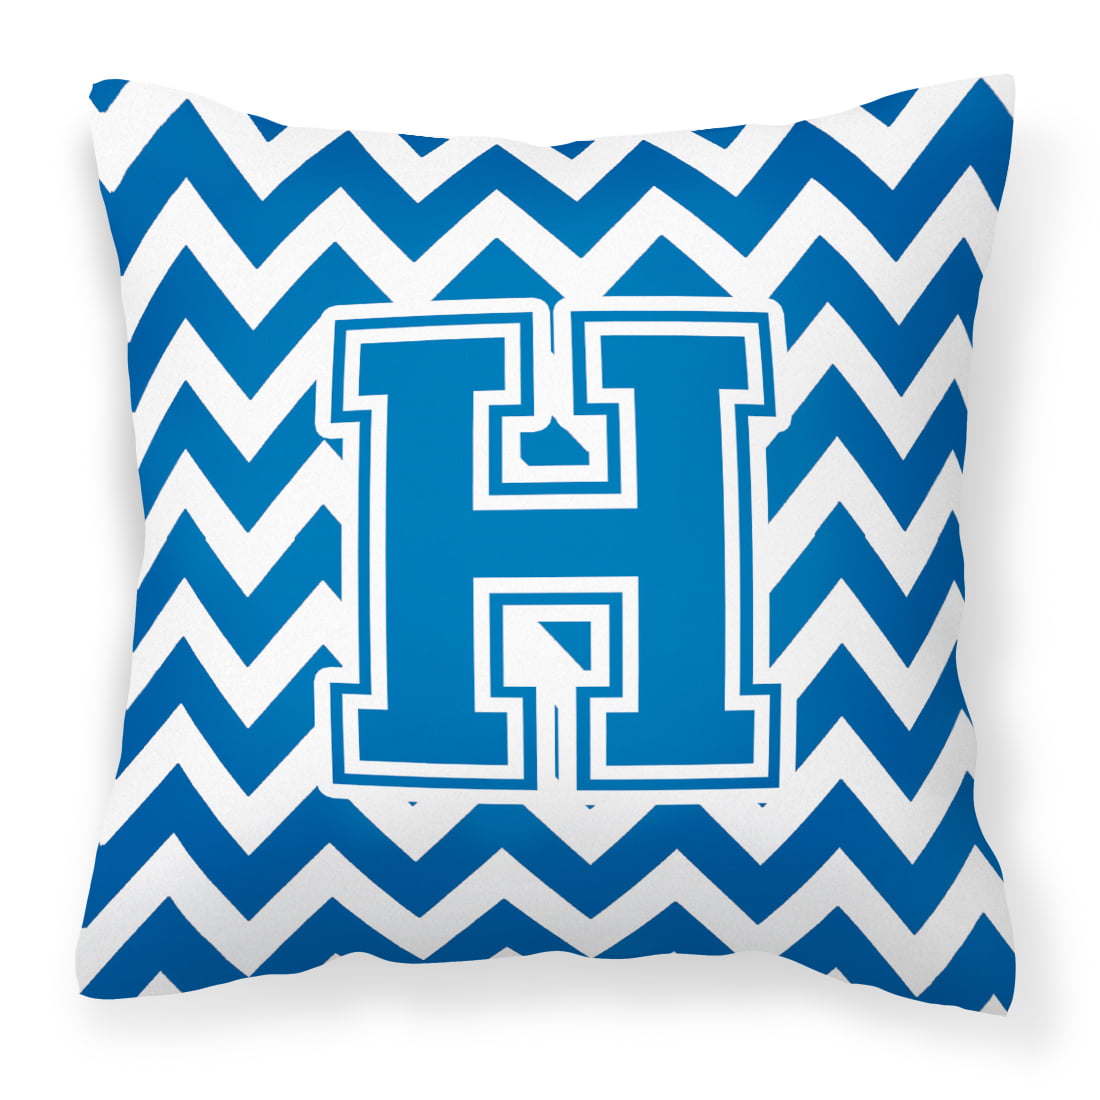 Letter H Chevron Blue and White Fabric Decorative Pillow - Walmart.com